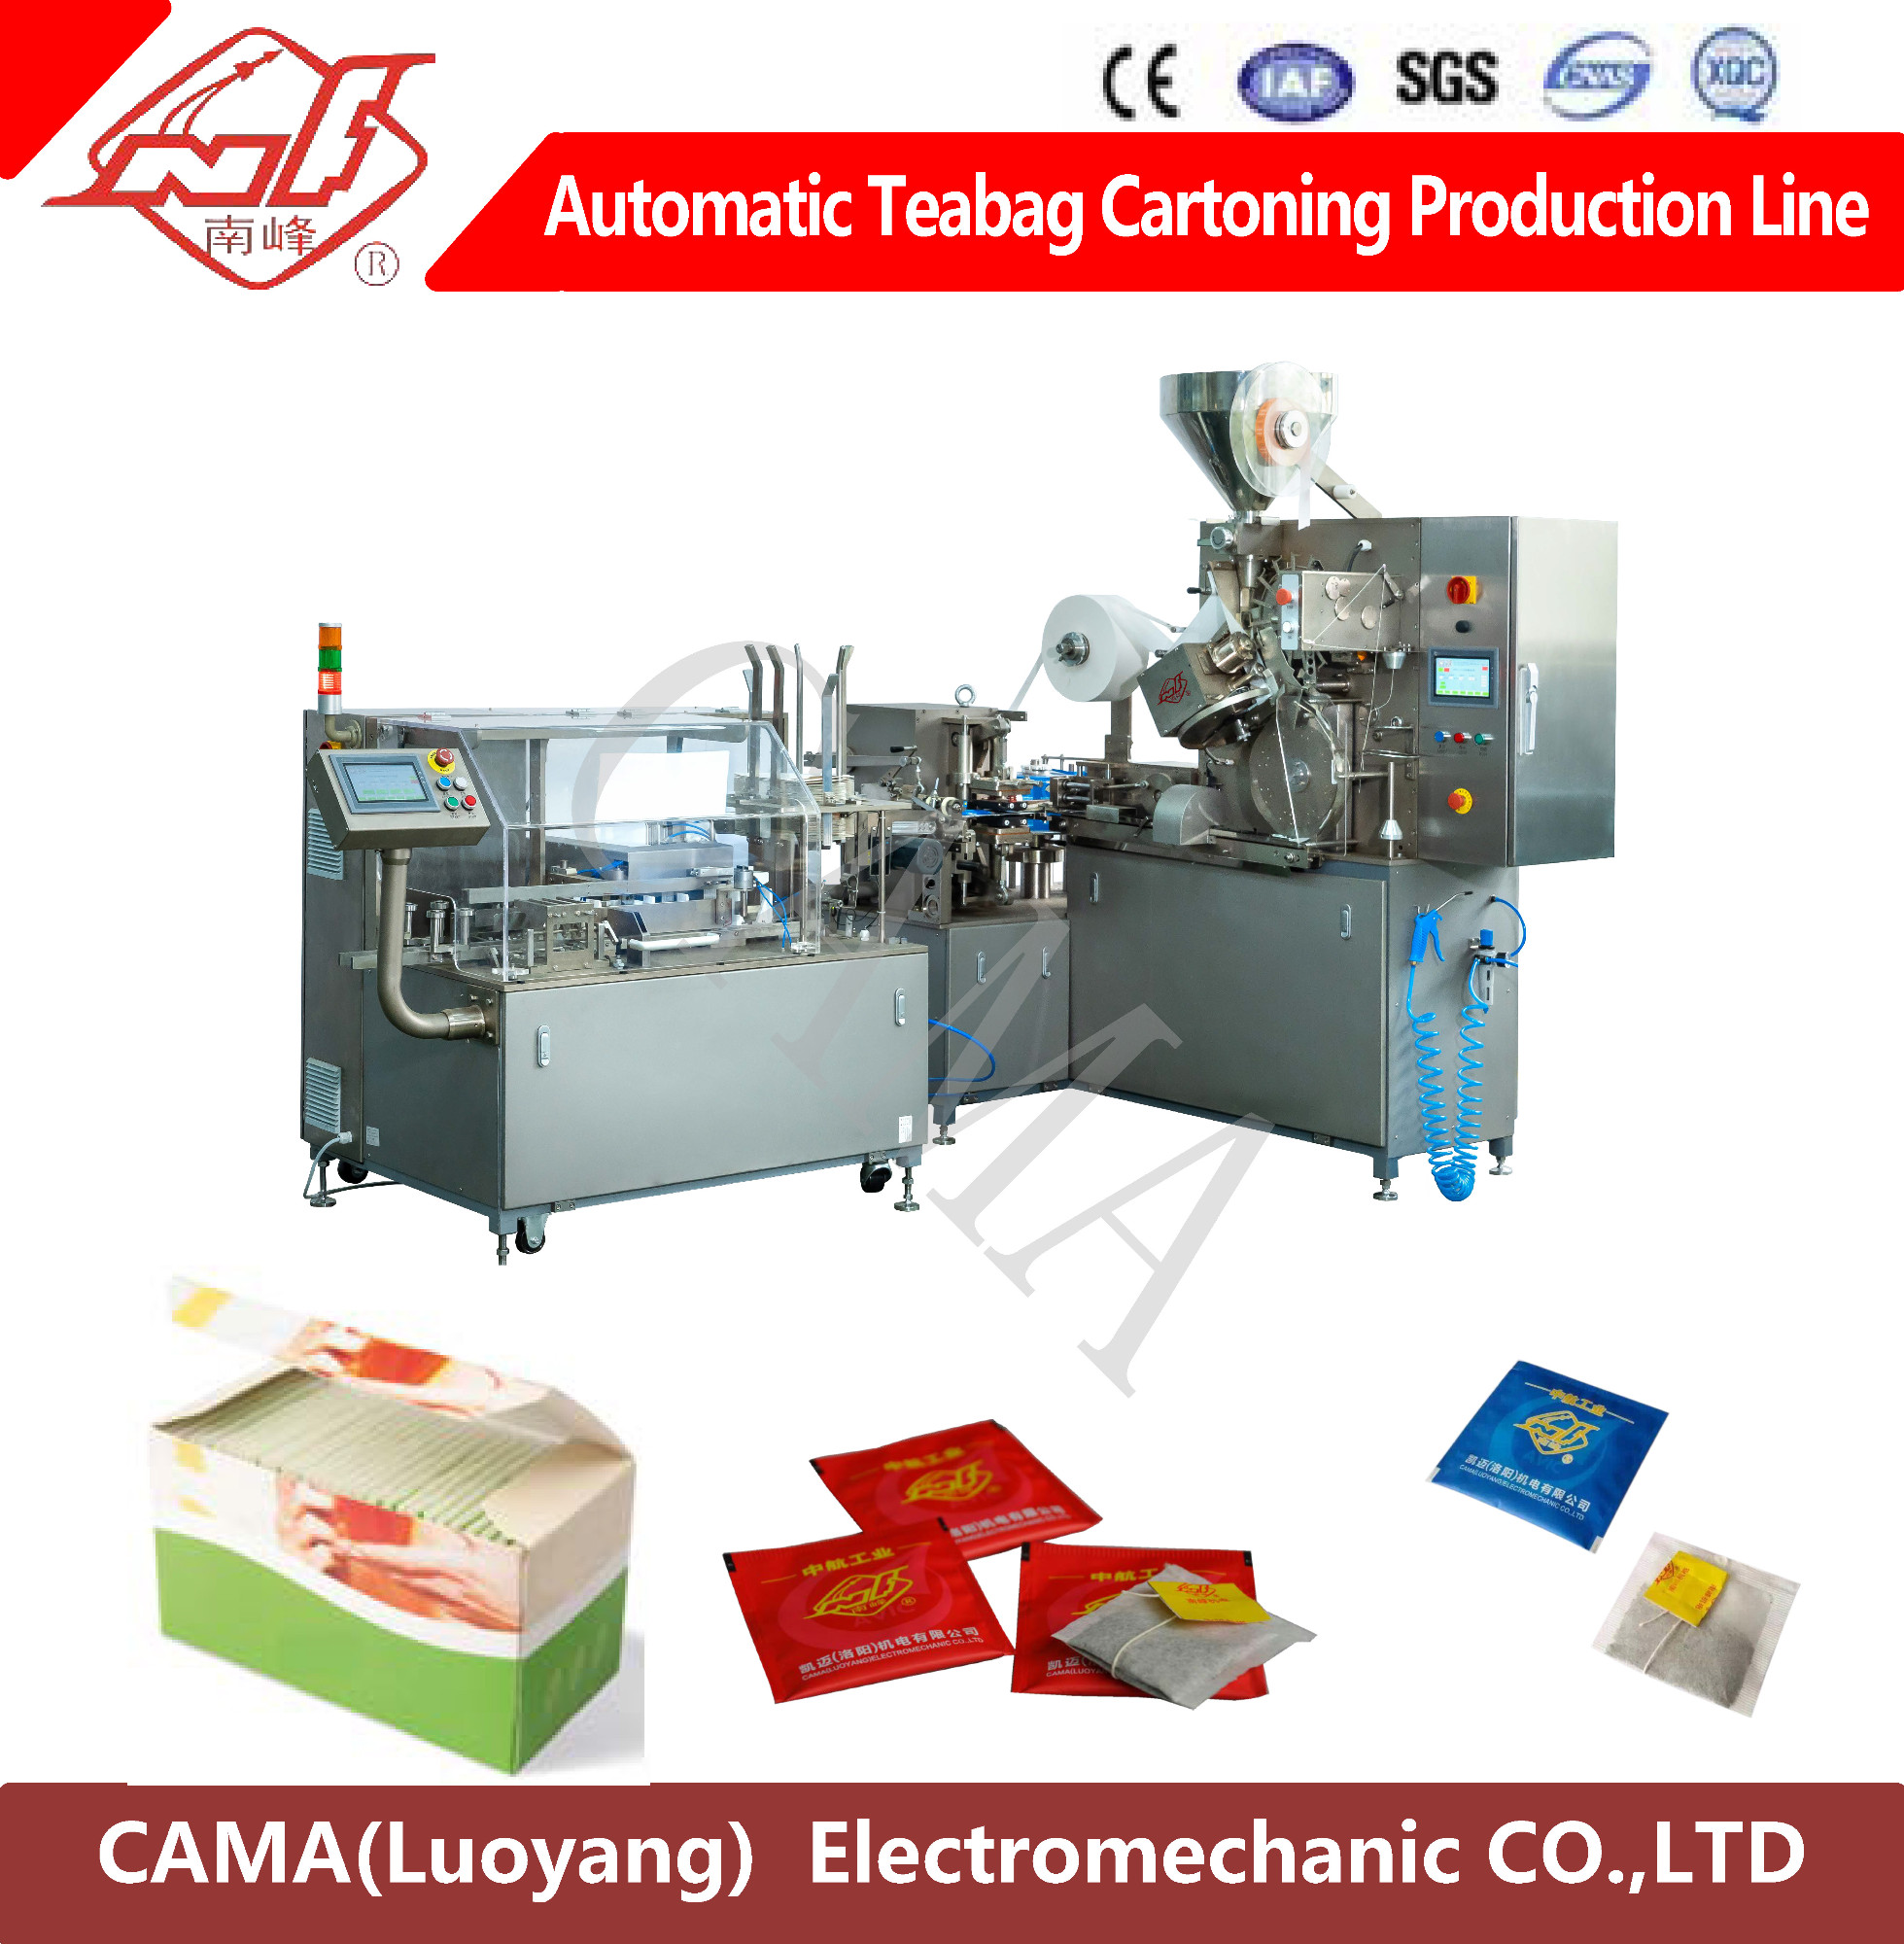 Automatic Teabag Cartoning Production Line